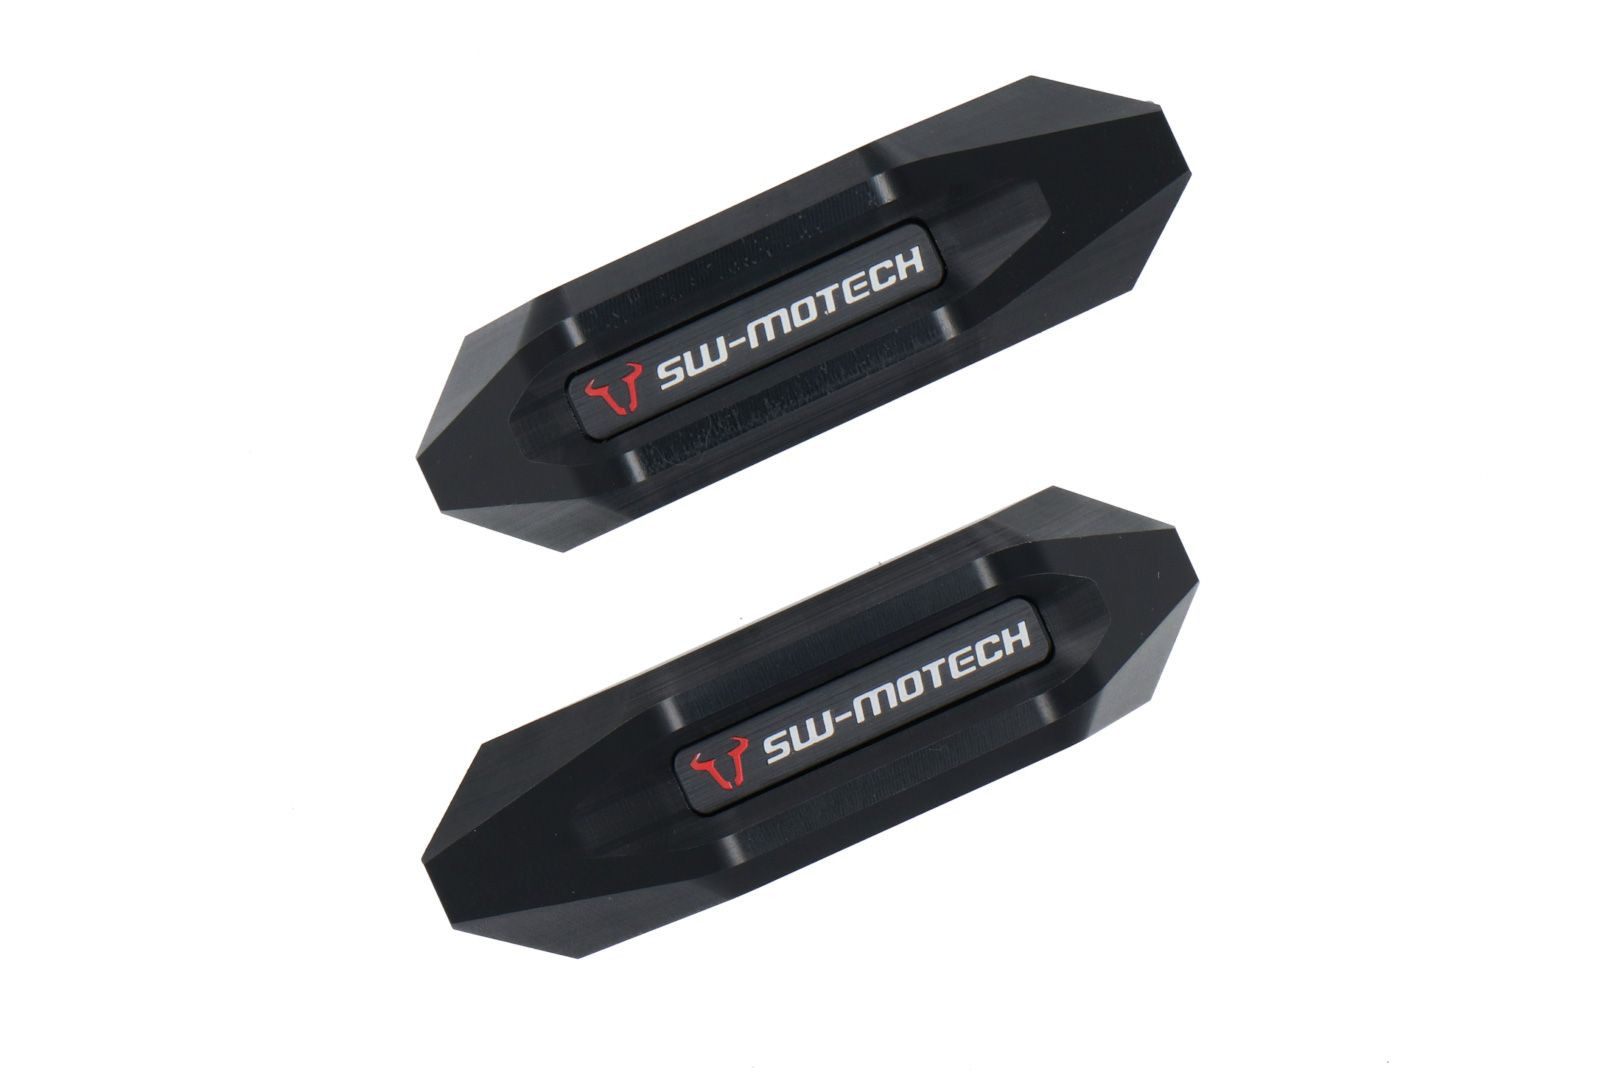 SW-Motech Sturzpad-Set Ersatz-Sturzpads für Sturzpad-Kit. als Paar Set